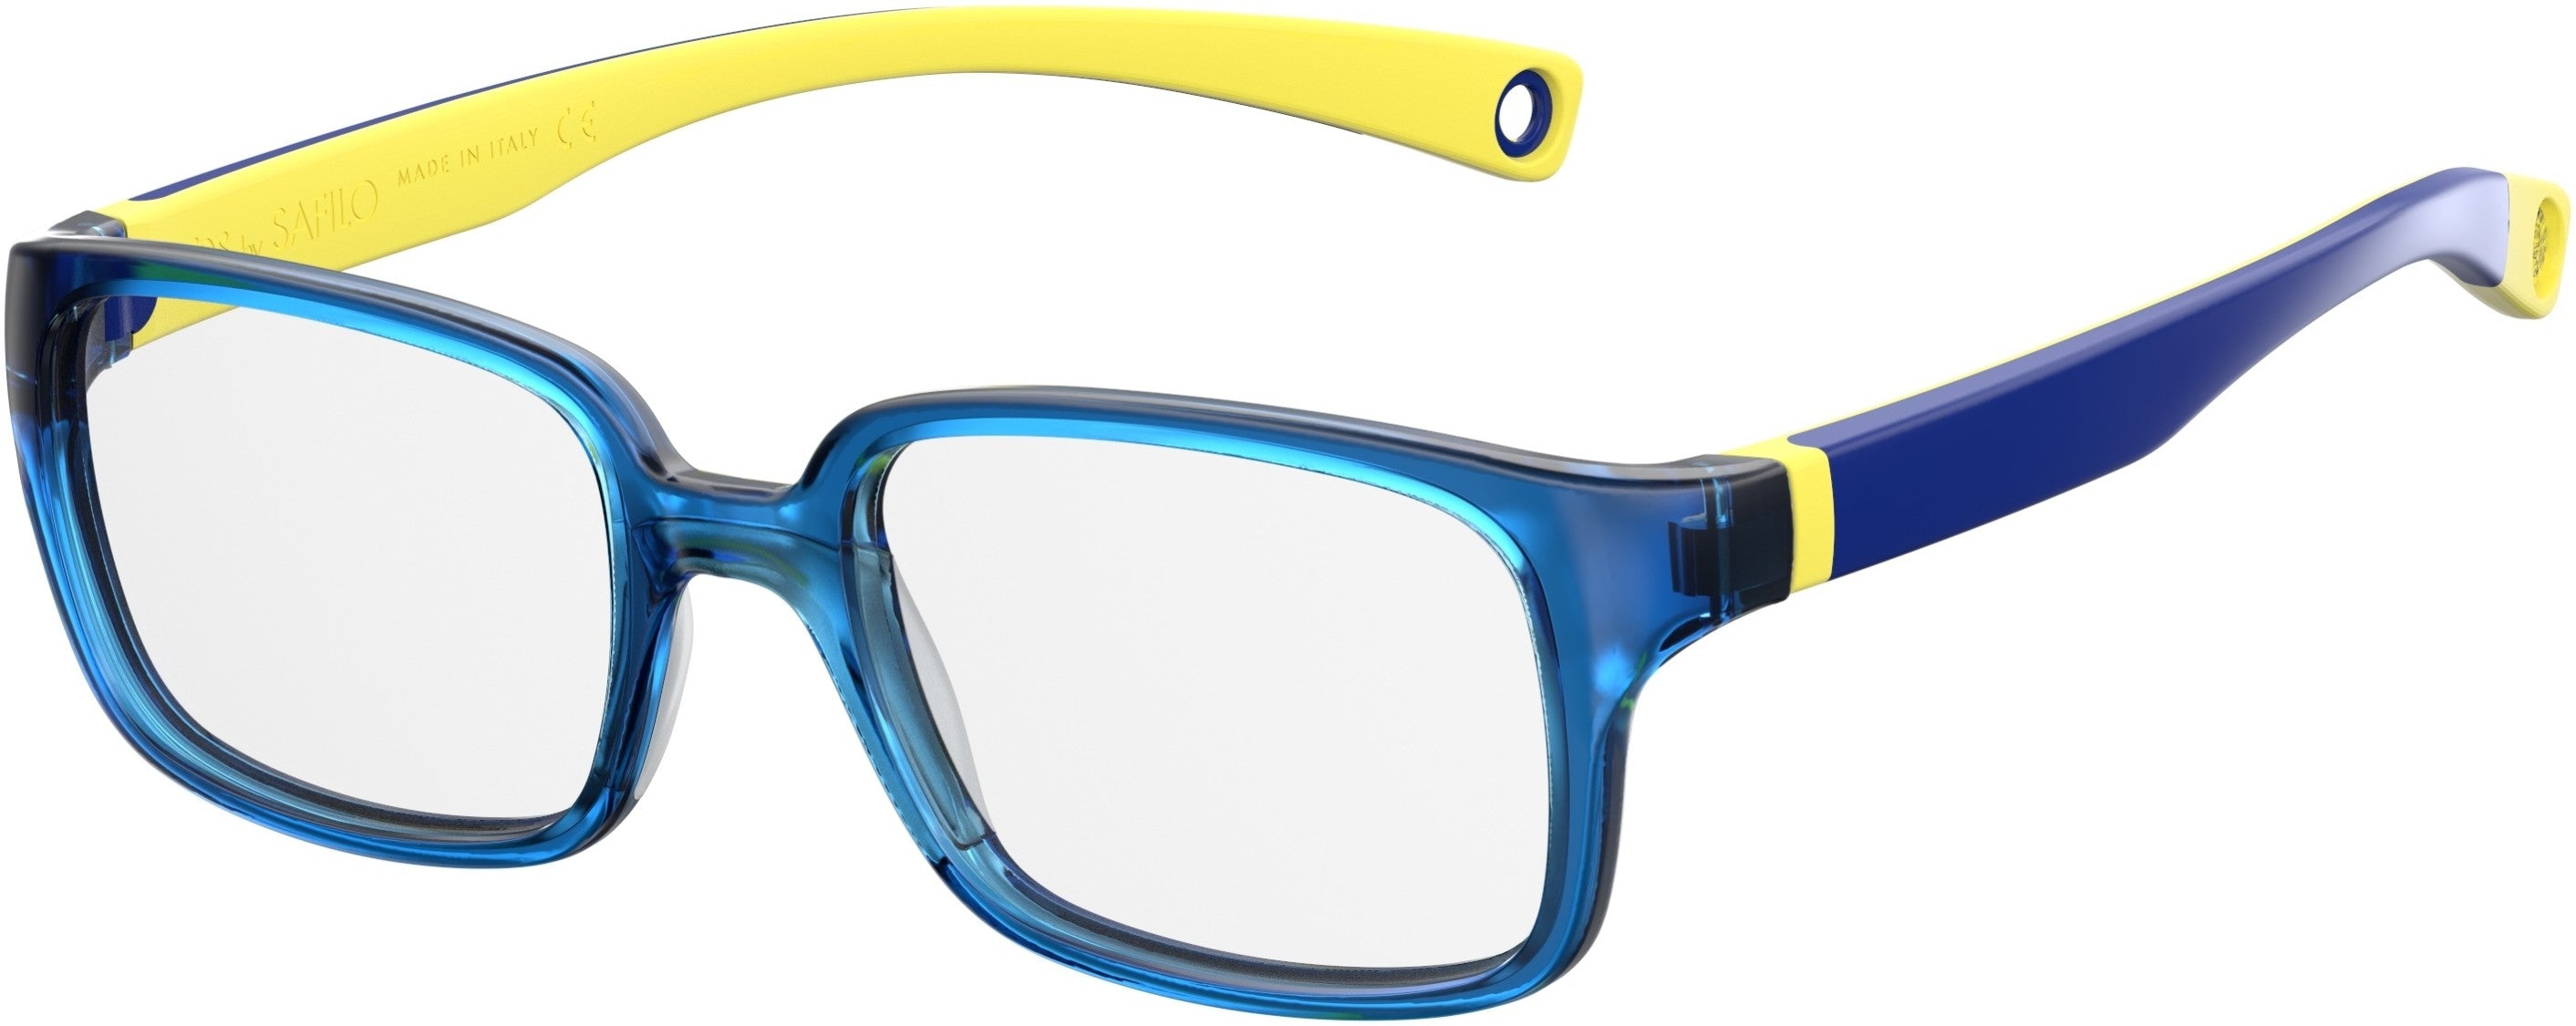 Safilo Safilo Kids Safilo 0005/N Oval Modified Eyeglasses 0DCD-0DCD  Blue Yellow (00 Demo Lens)